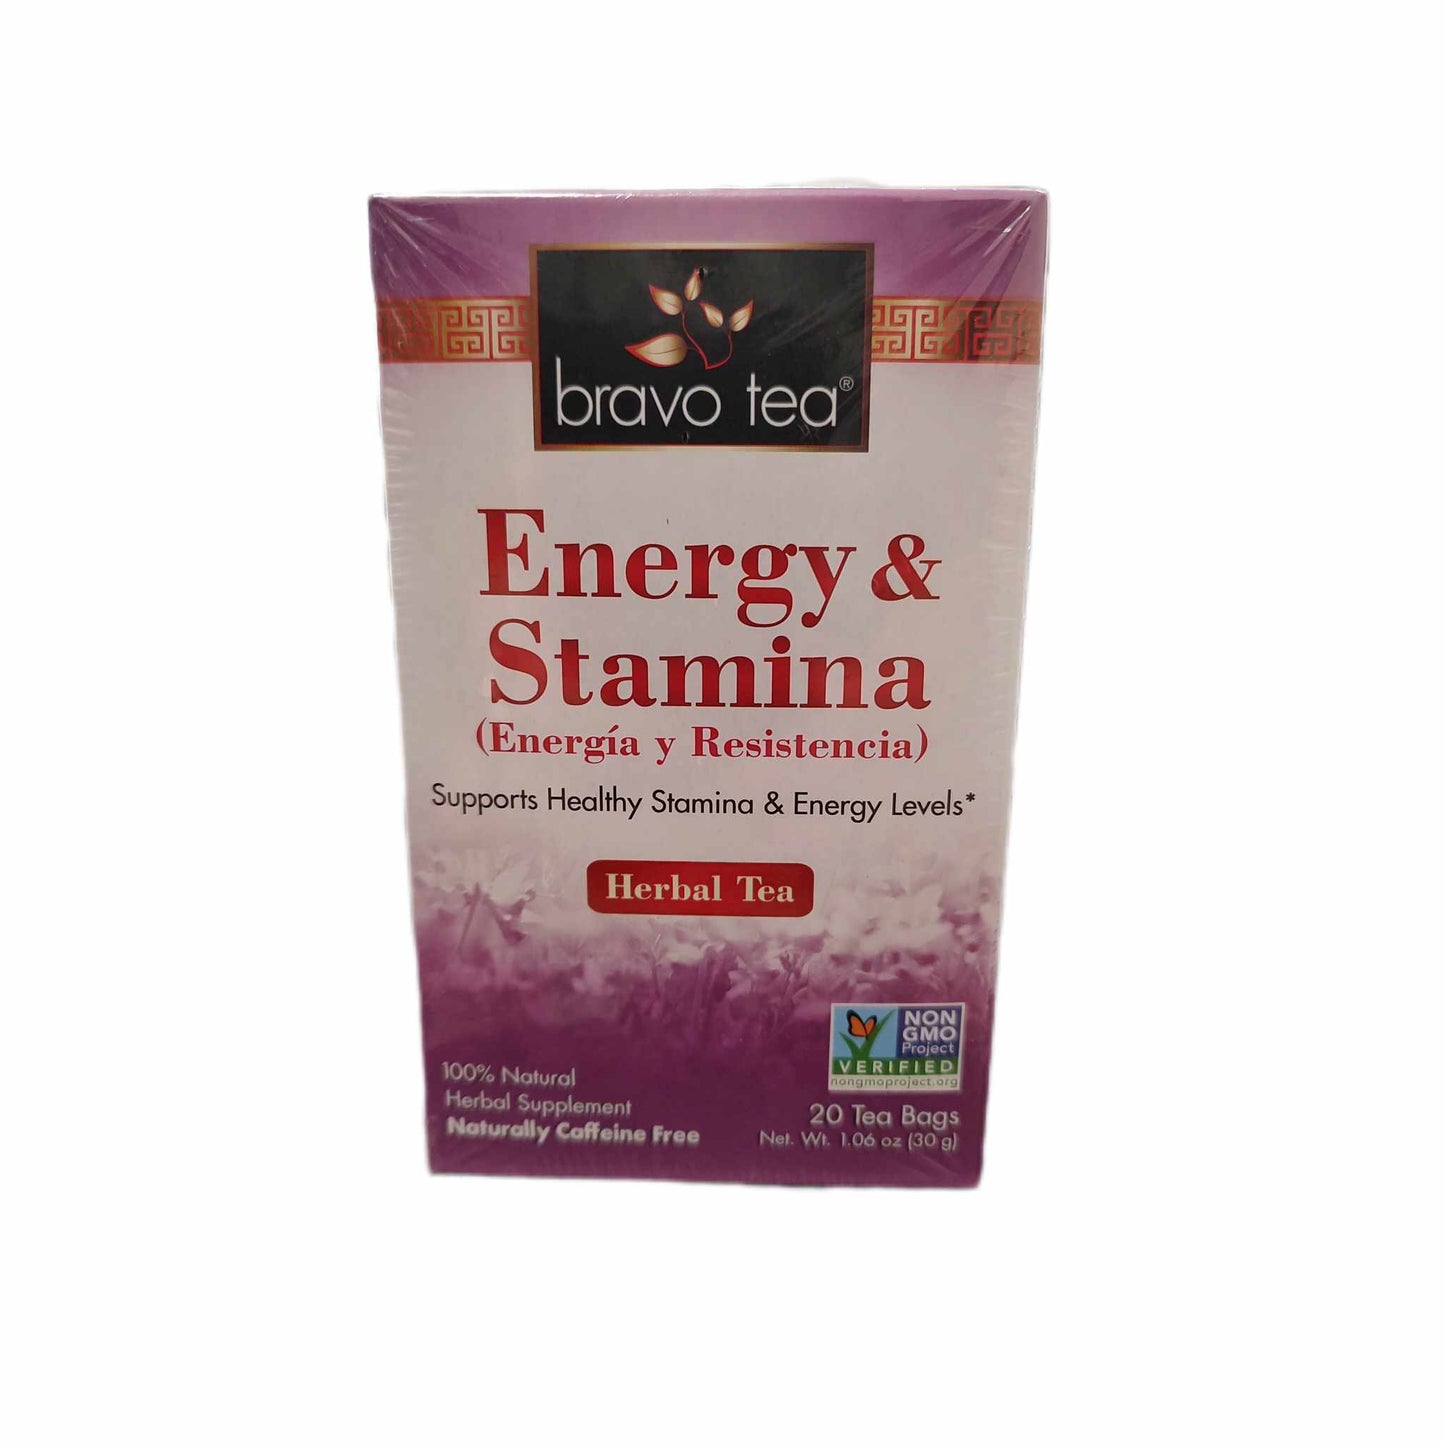 Bravo Tea Energy & Stamina